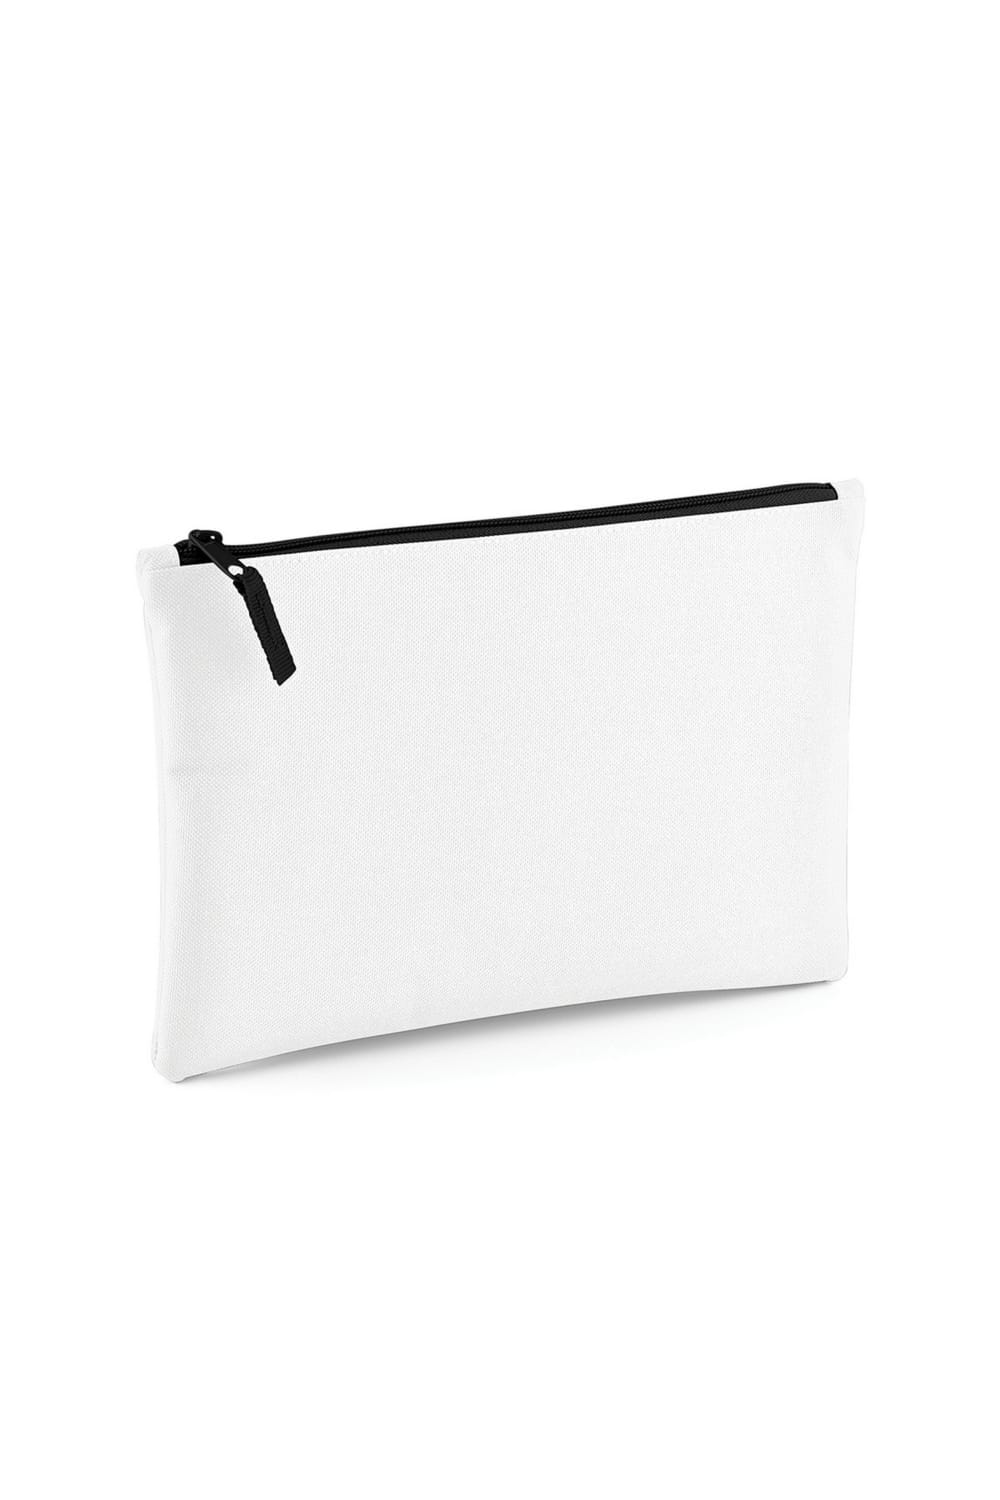 Bagbase Grab Zip Pocket Pouch Bag (Pack of 2) (White/Black)